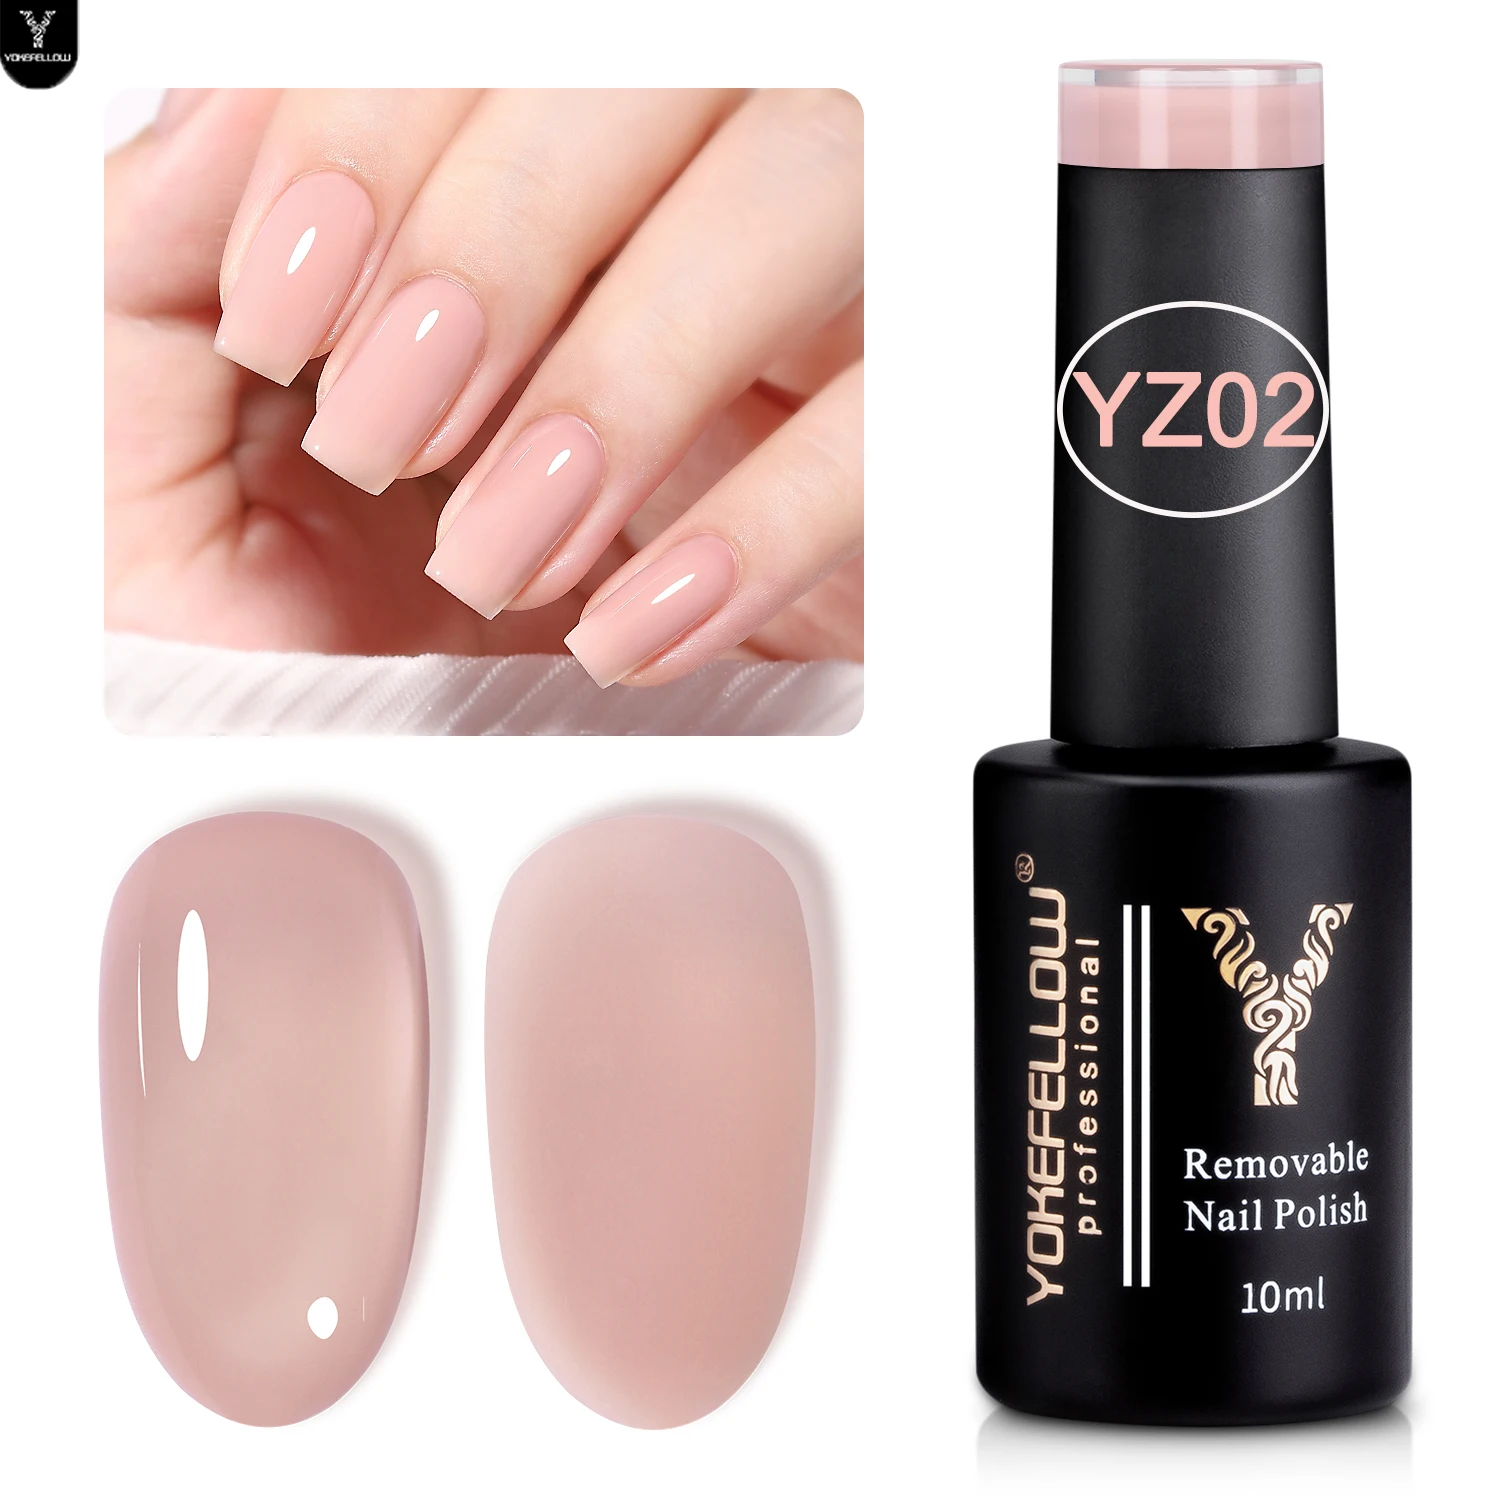 

YOKEFELLOW Sheer Nude Gel Nail Polish 10ML Jelly Natural Pink Translucent Color YZ02 UV Light Cure Gel Polish for Nail Art DIY